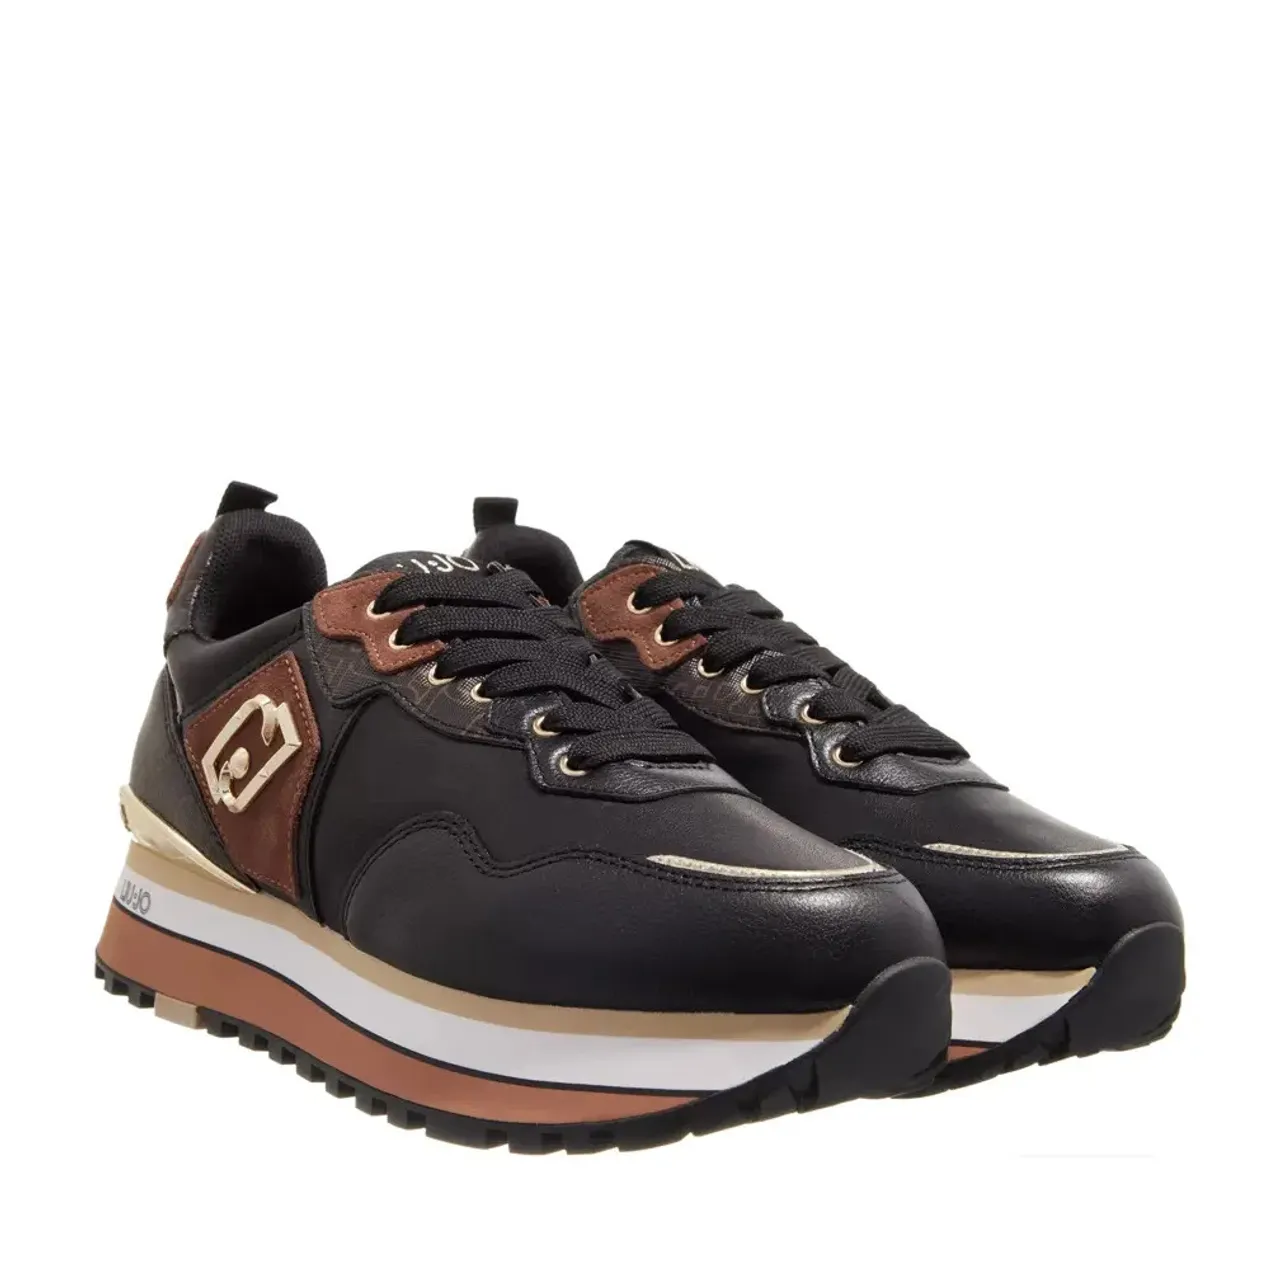 Liu Jo Maxi wonder sneaker 01 tumbled leather brown